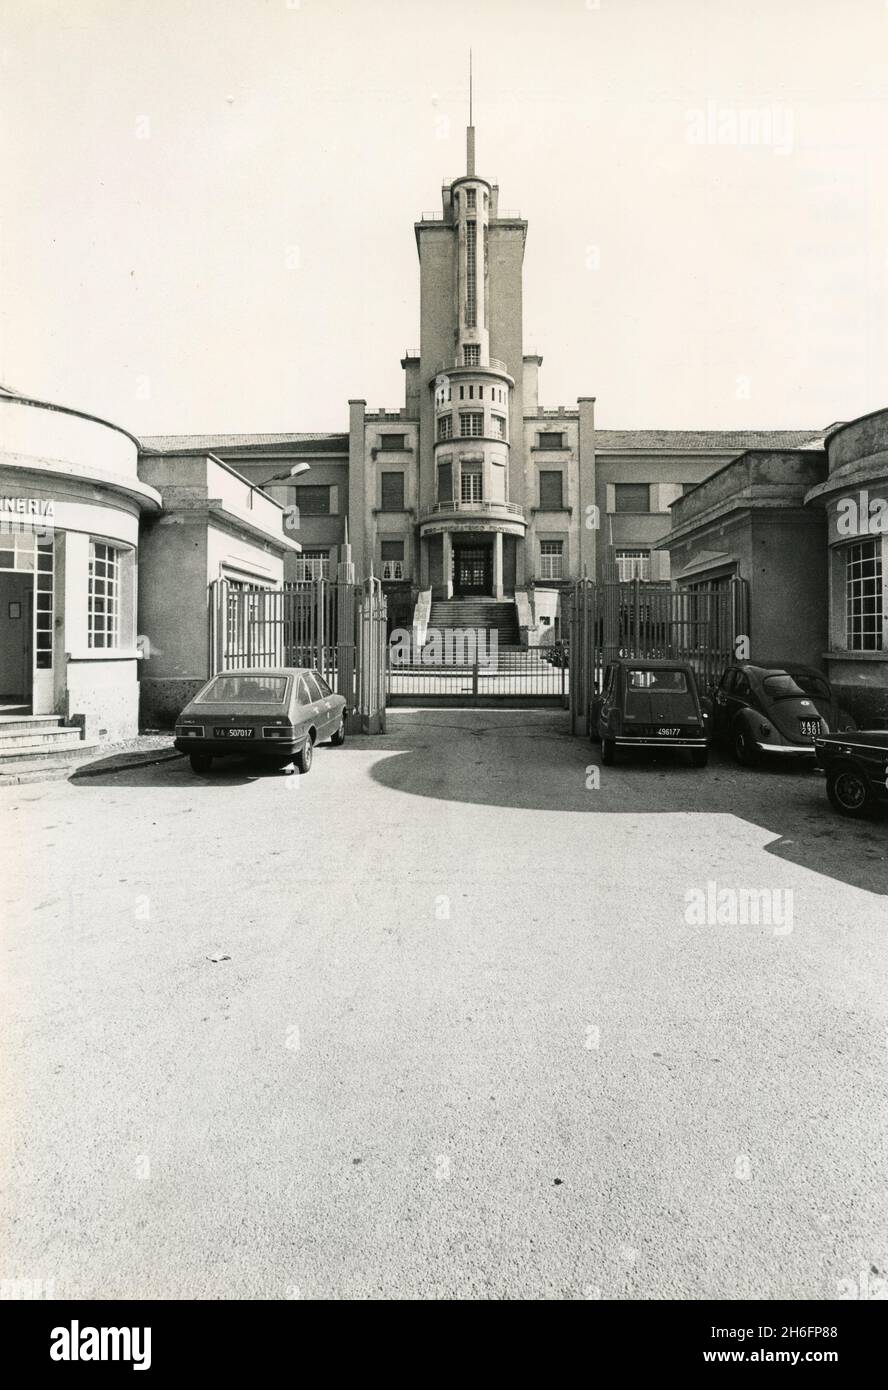 Bizzonero psychiatric hospital entrance, Varese, Italy 1981 Stock Photo